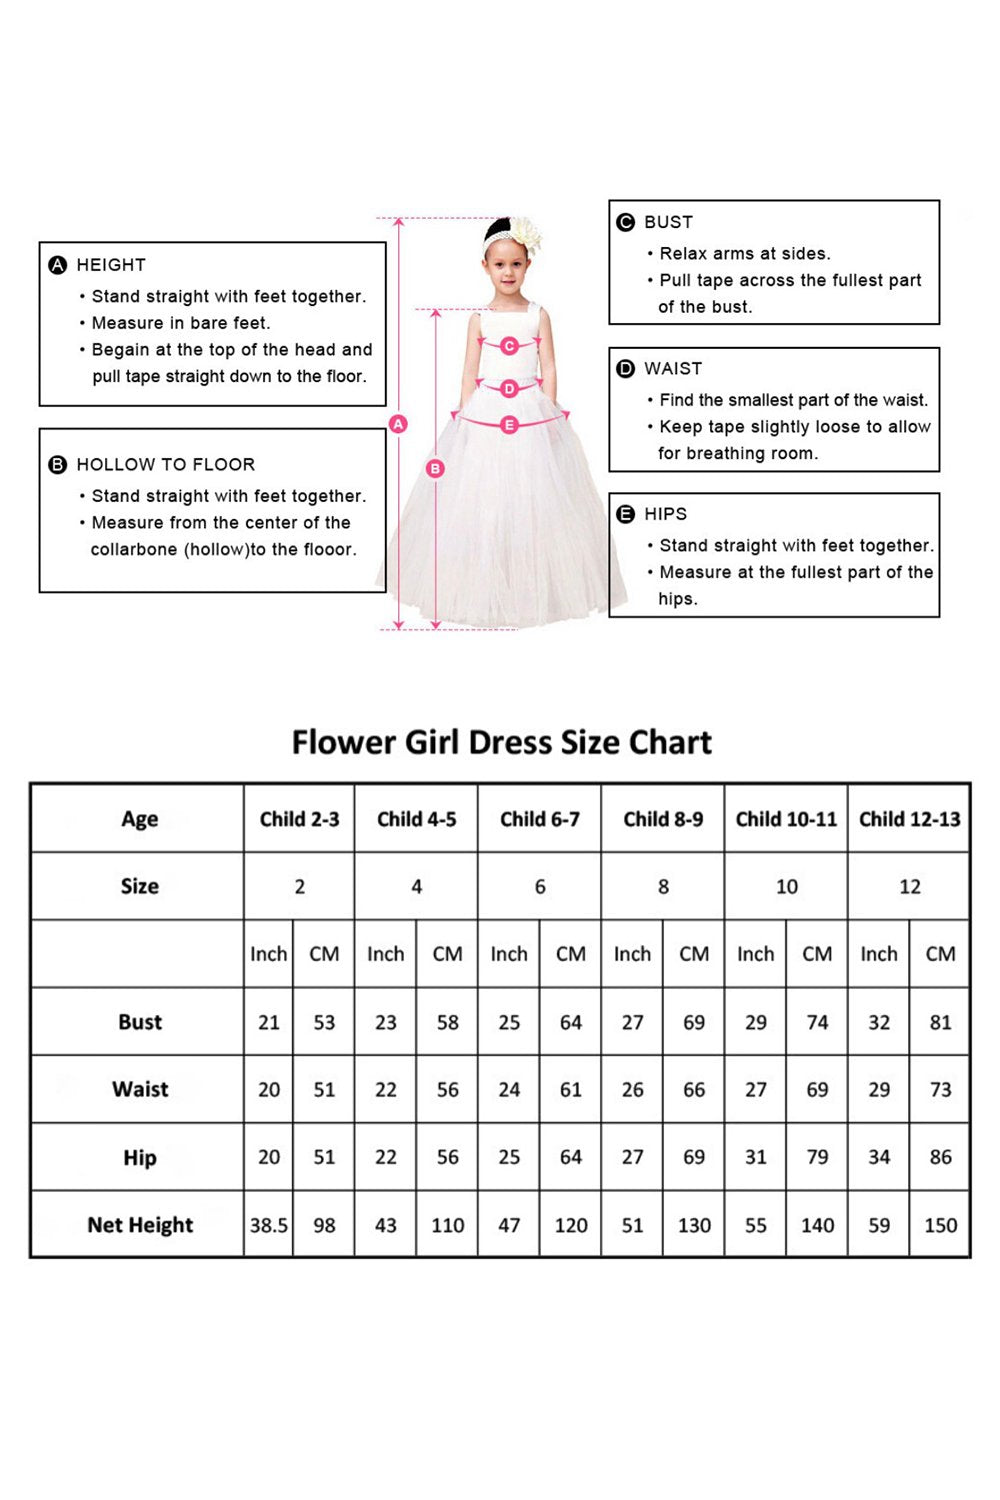 Ball Gown Floor Length Tulle Lace Flower Girl Dress CF0316